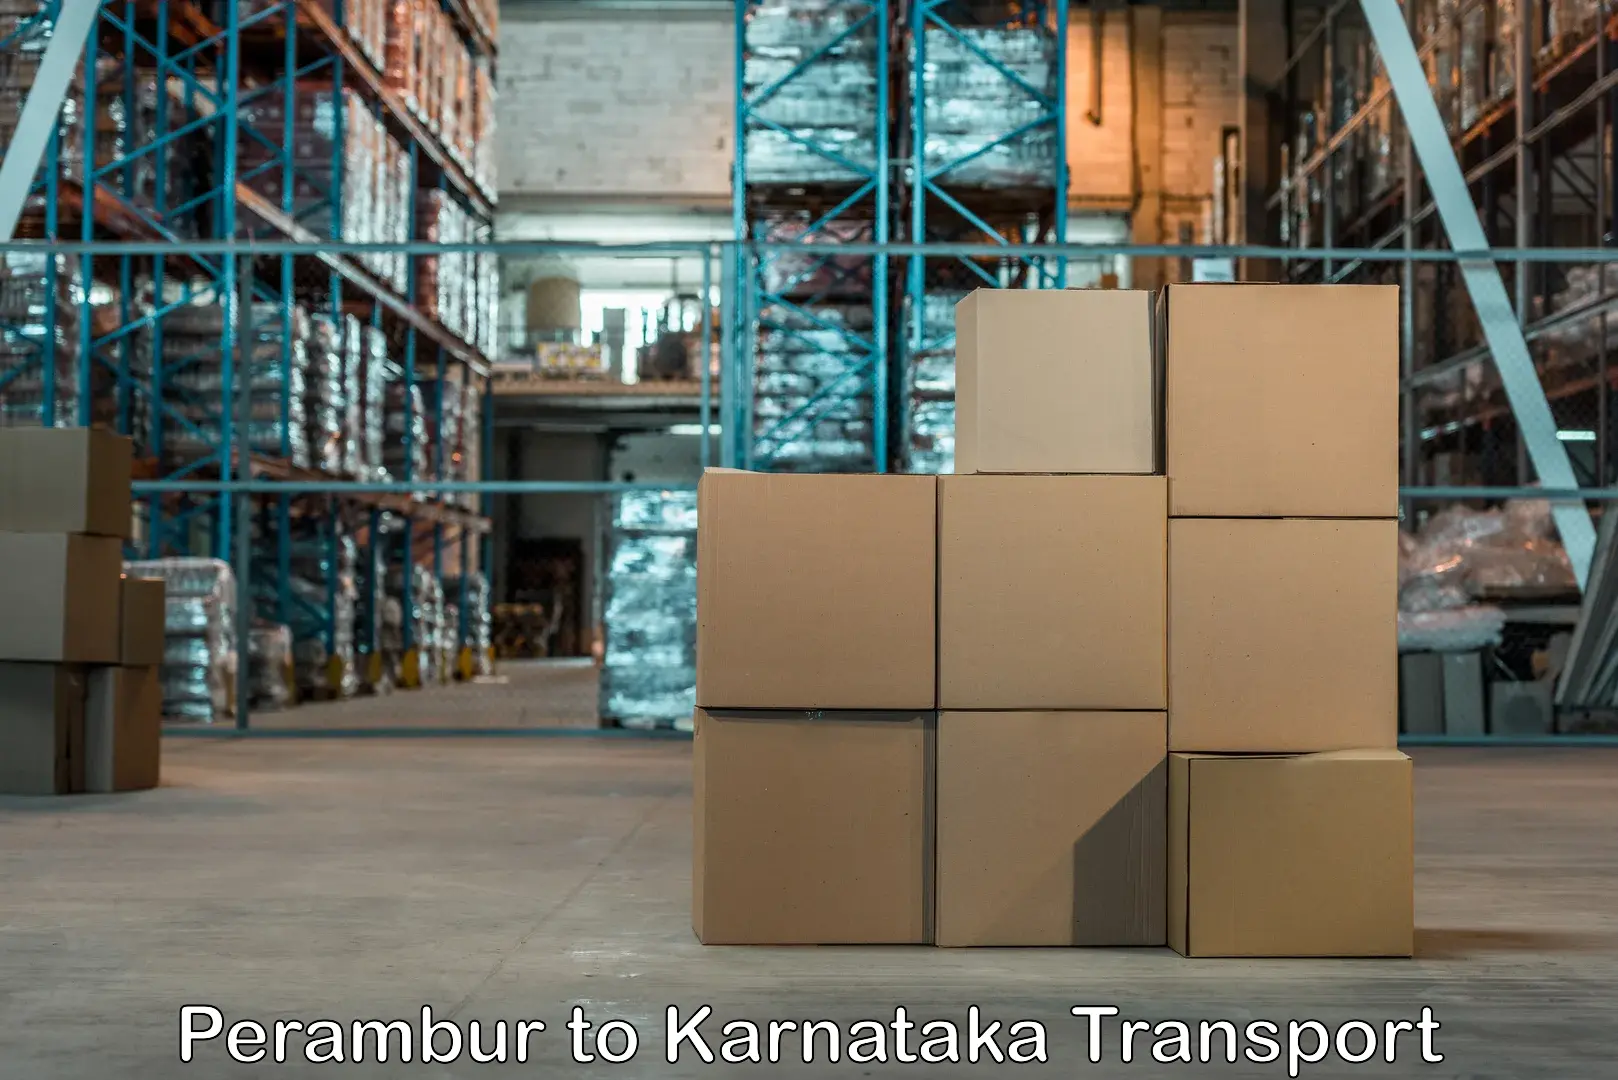 Truck transport companies in India Perambur to Thirthahalli